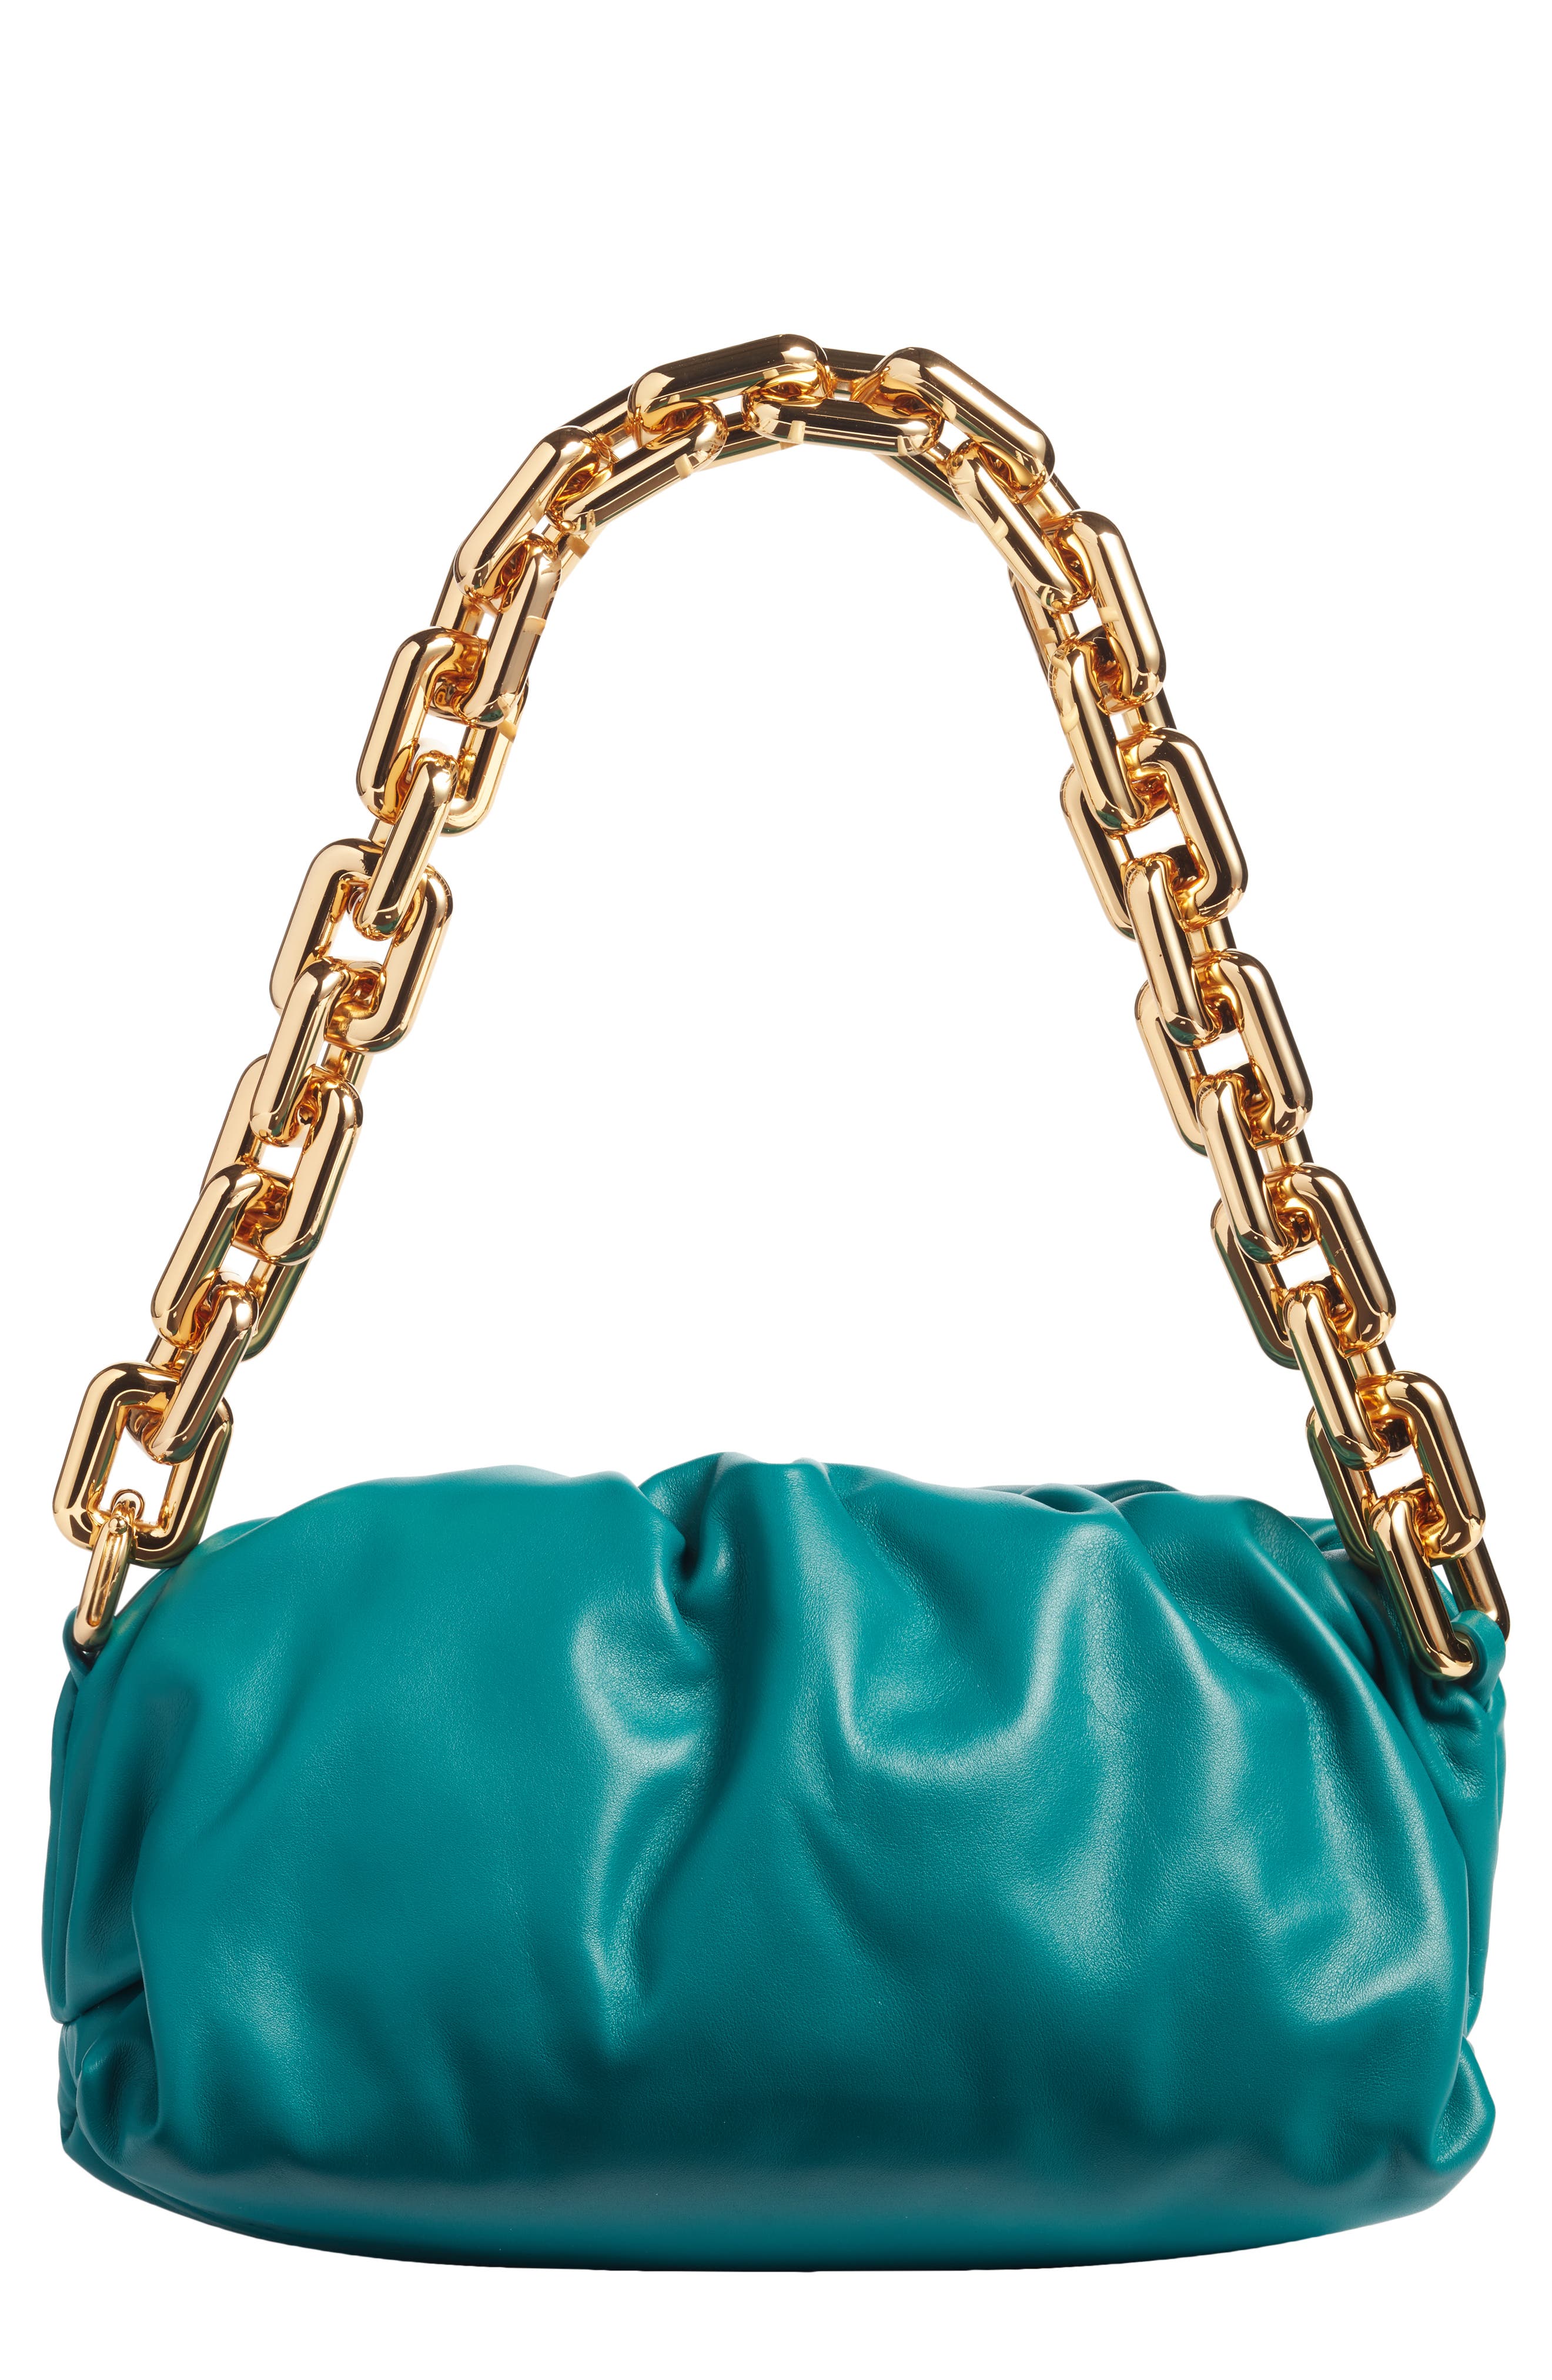 Bottega Veneta The Chain Pouch Leather Shoulder Bag in Mallard/Gold